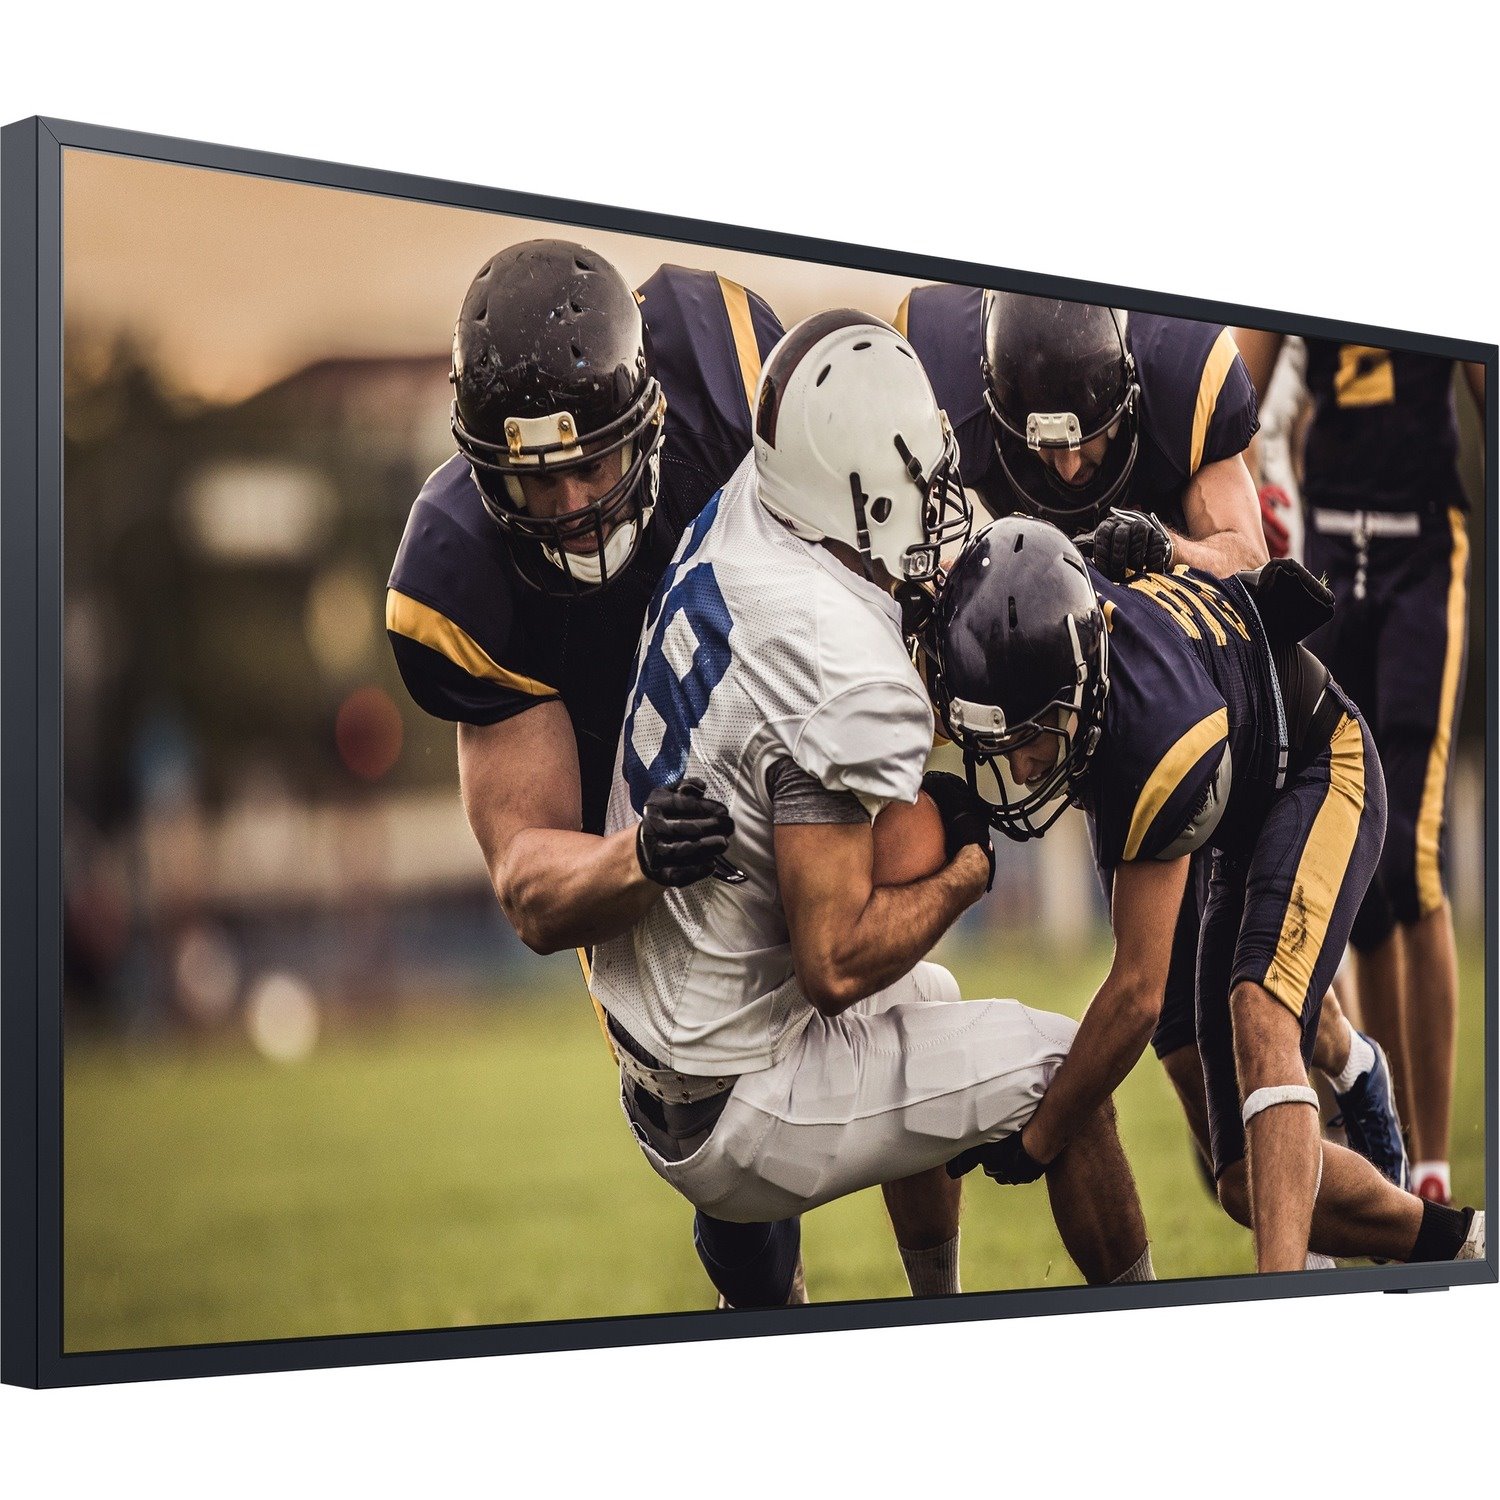 Samsung LH55BHTELGP 55" Smart LED-LCD TV - 4K UHDTV - Titan Black